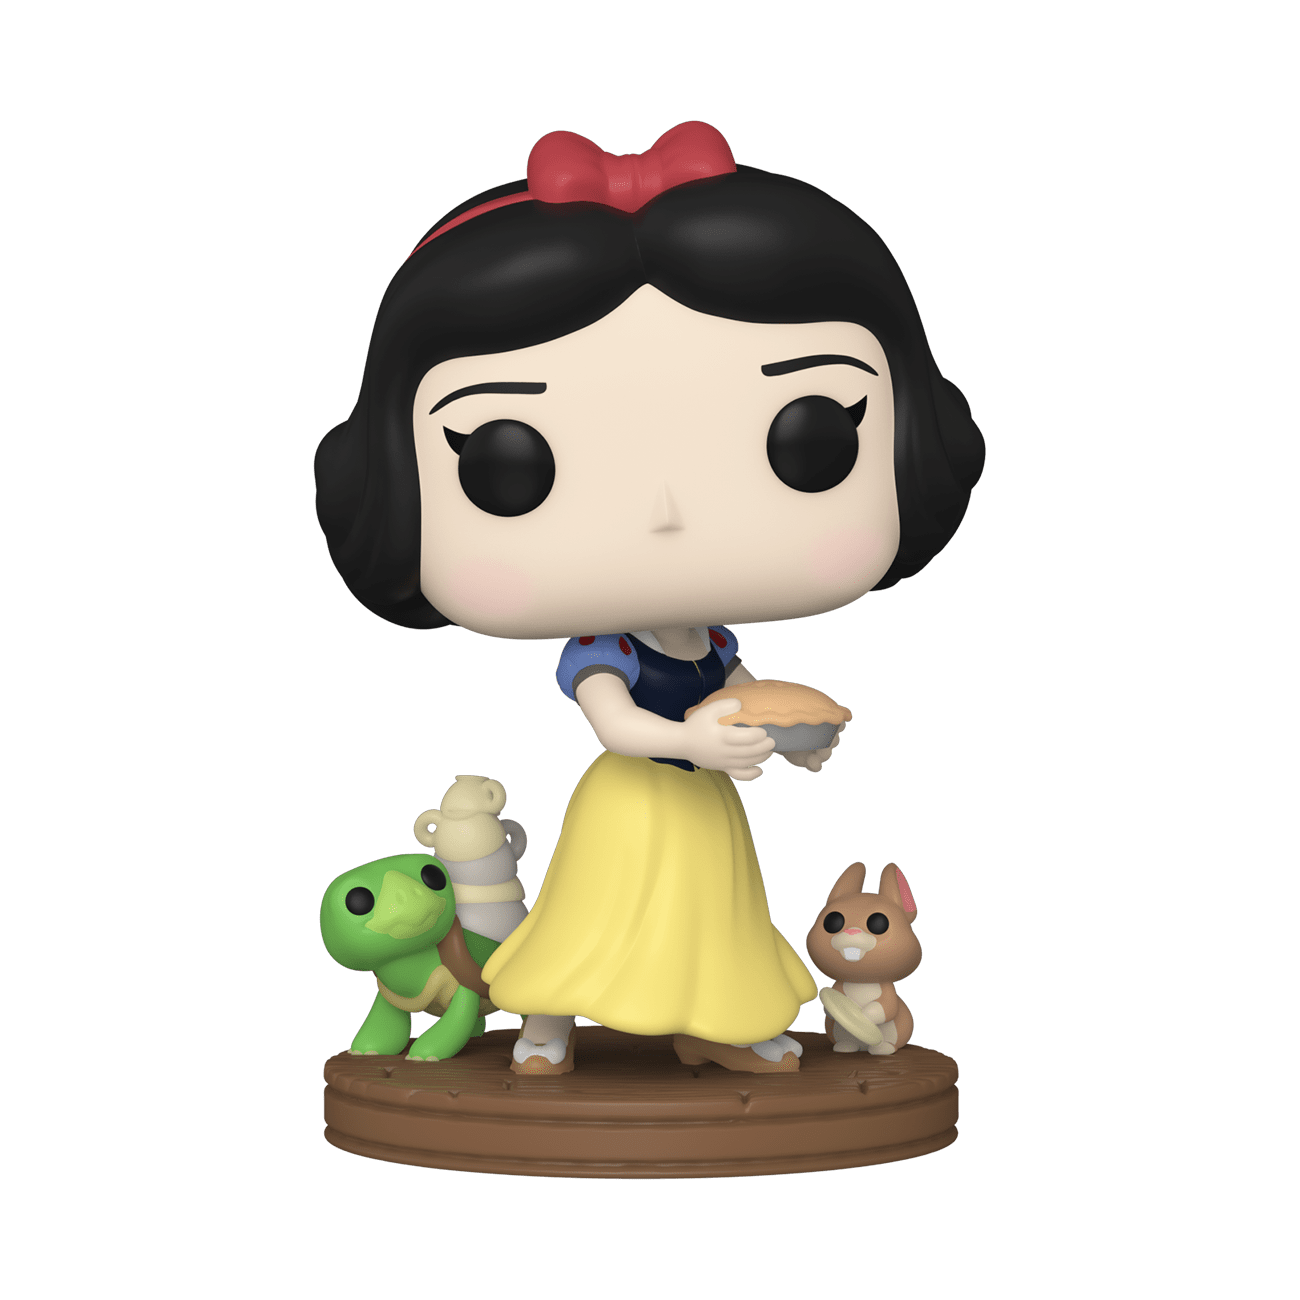 ultimate princess snow white funko pop!